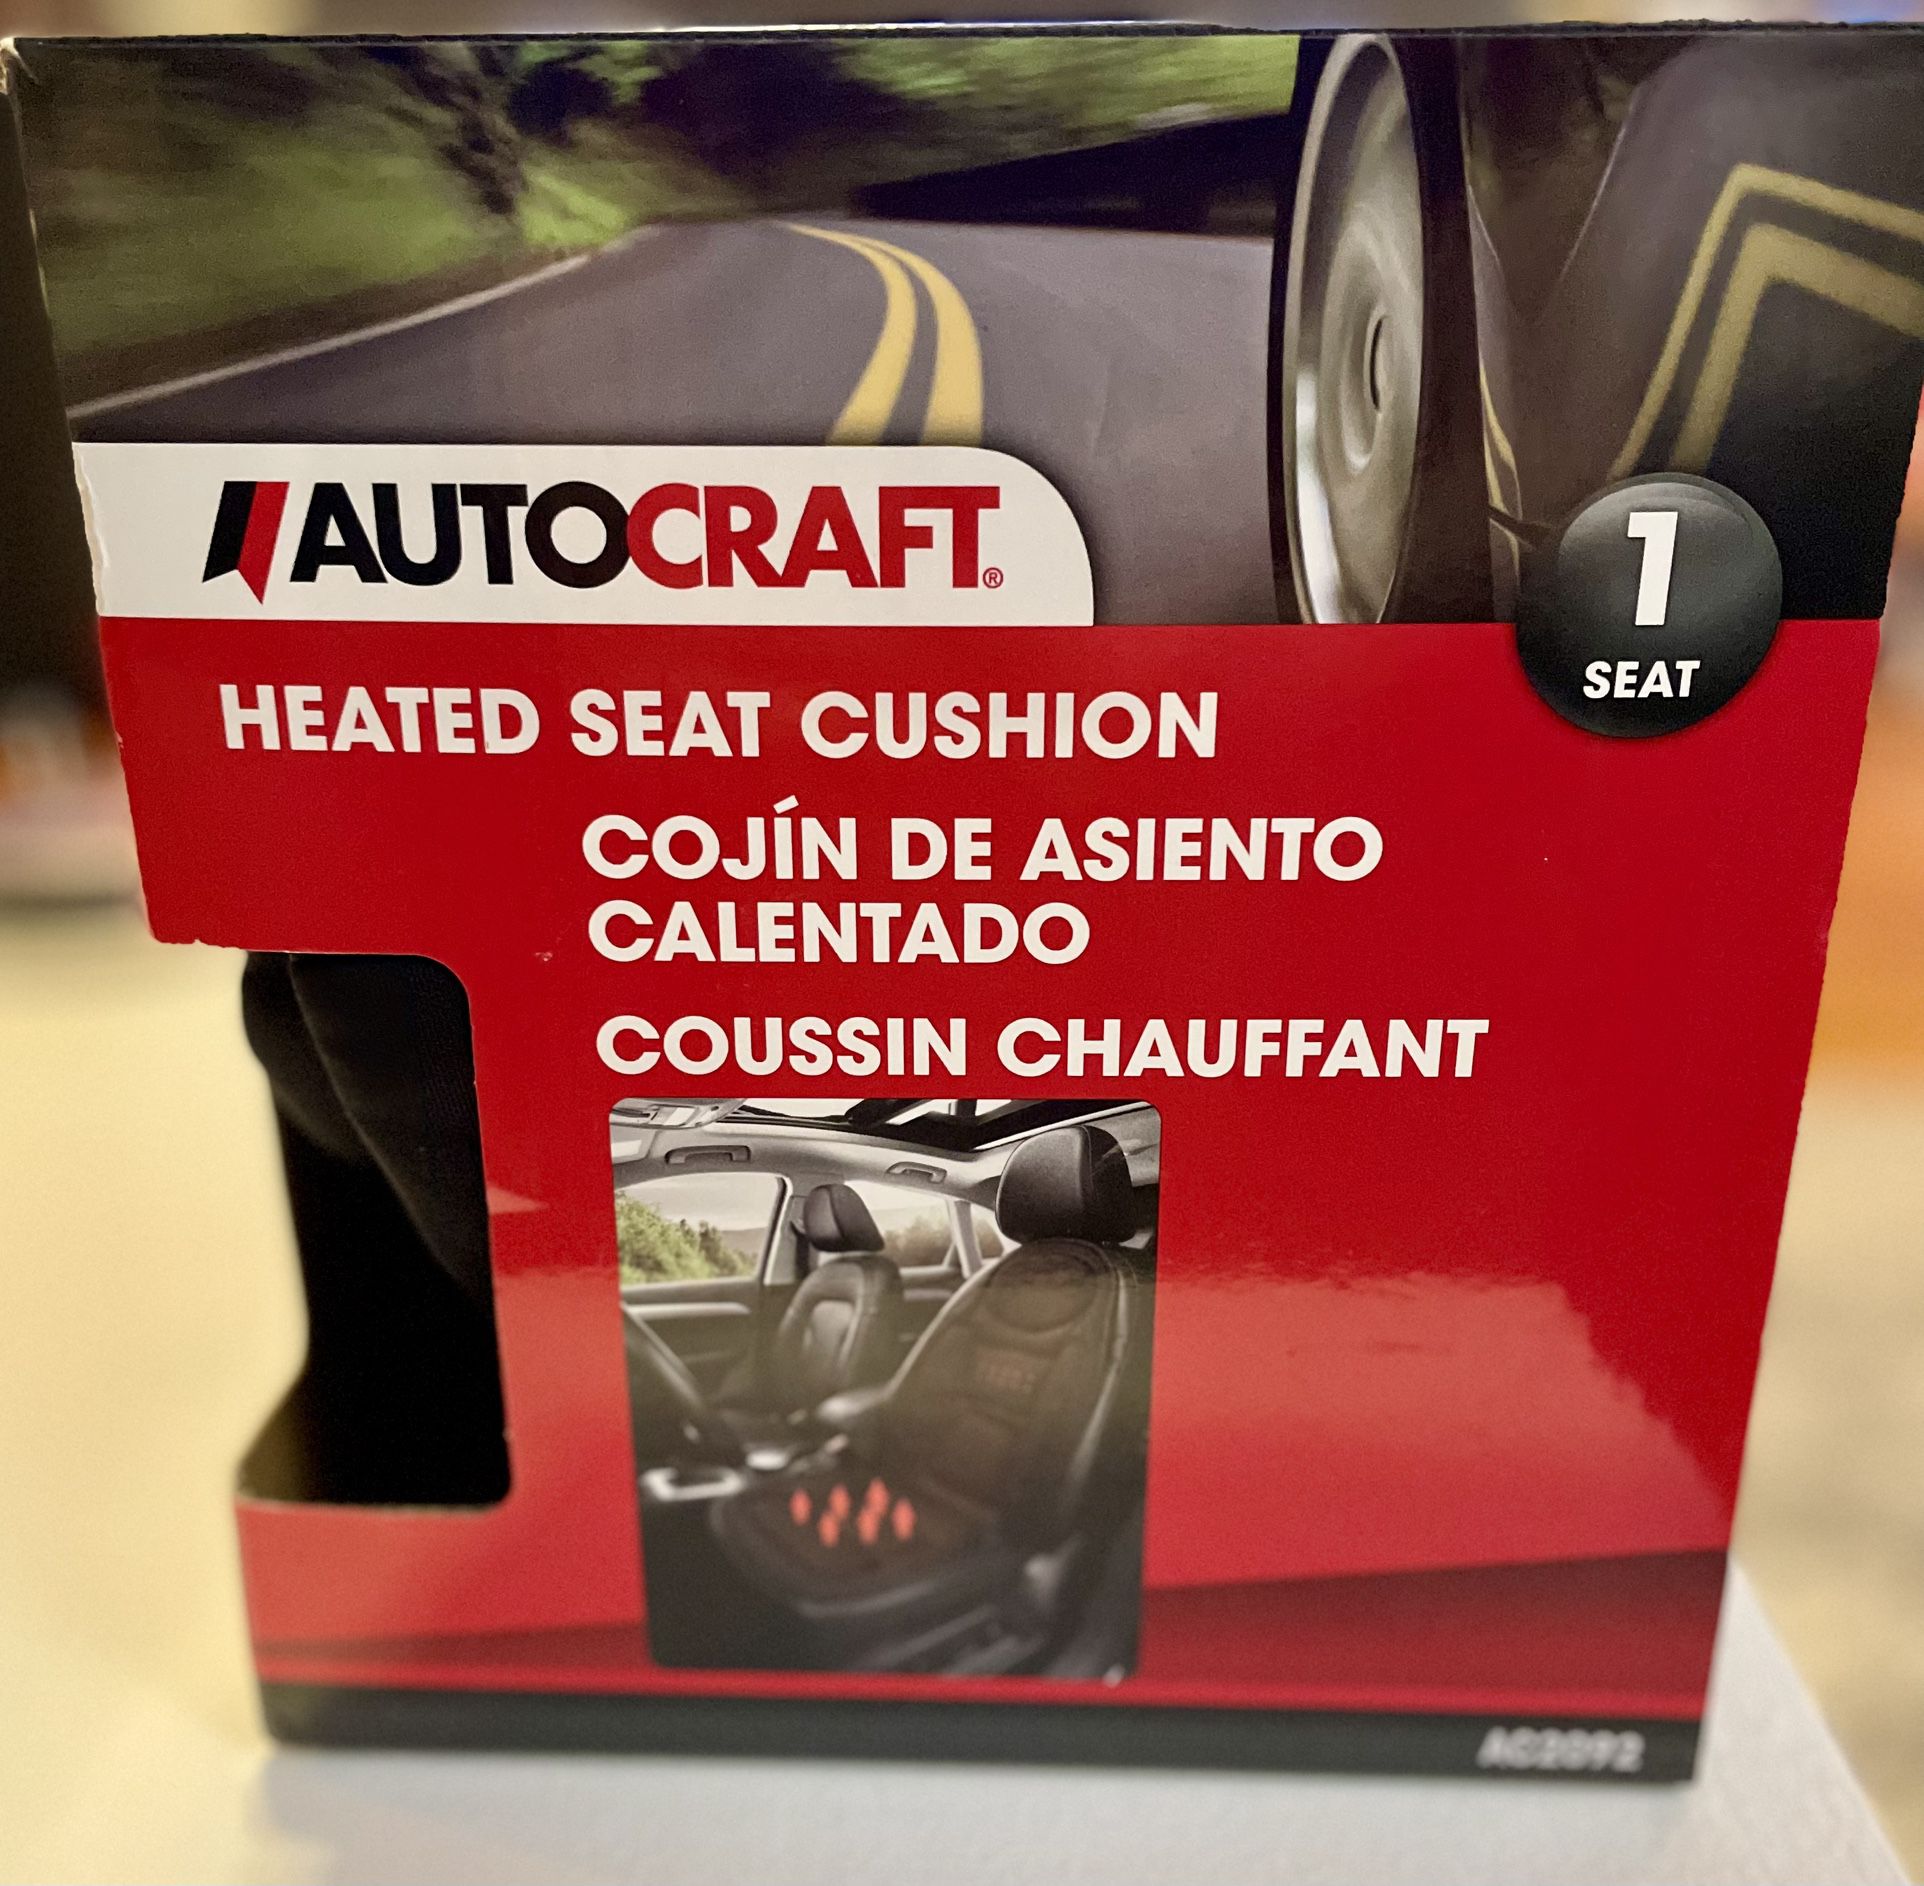 AutoCraft Heated Seat Cushion